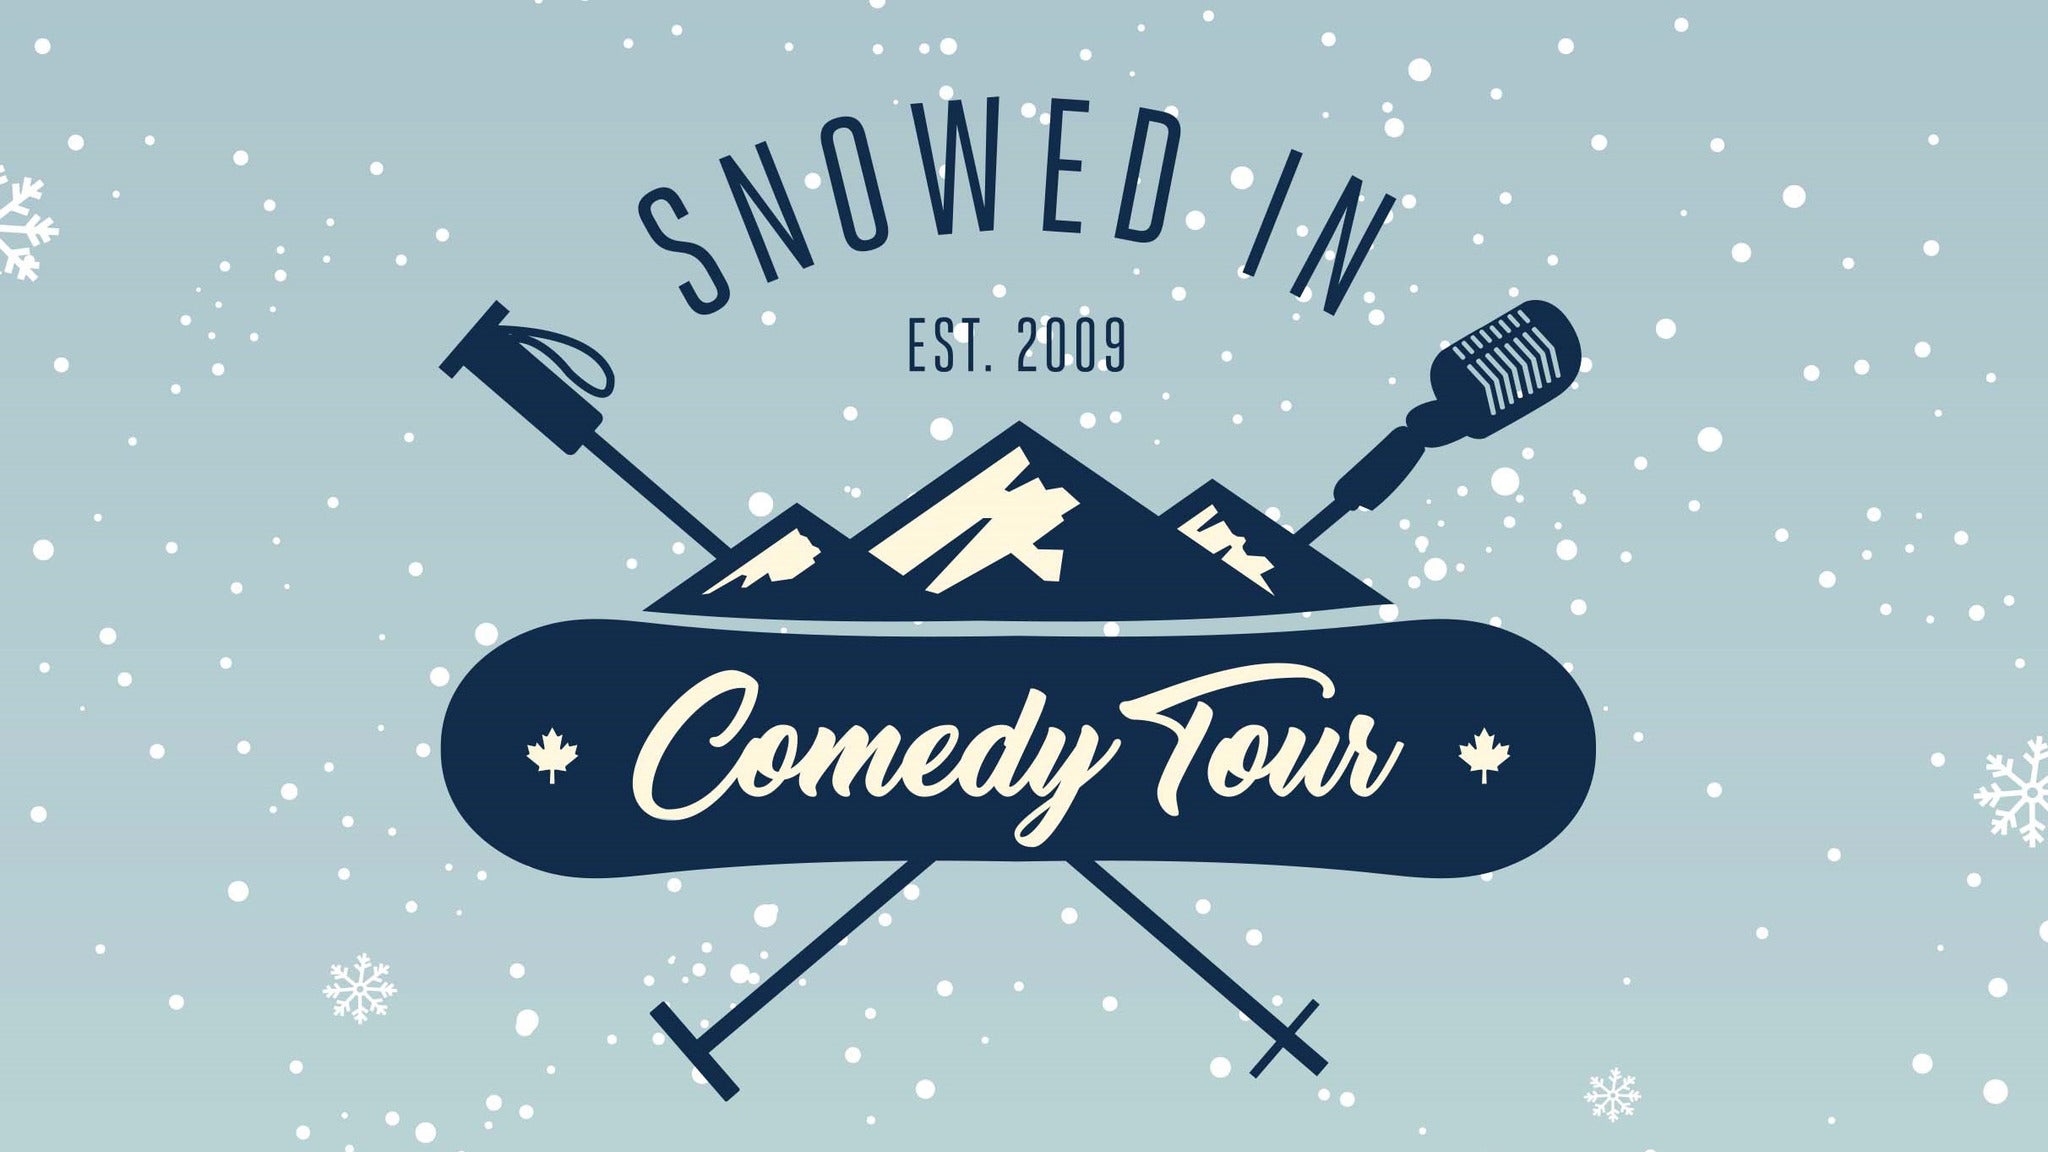 Snowed In Comedy Tour in Winnipeg promo photo for Internet presale offer code